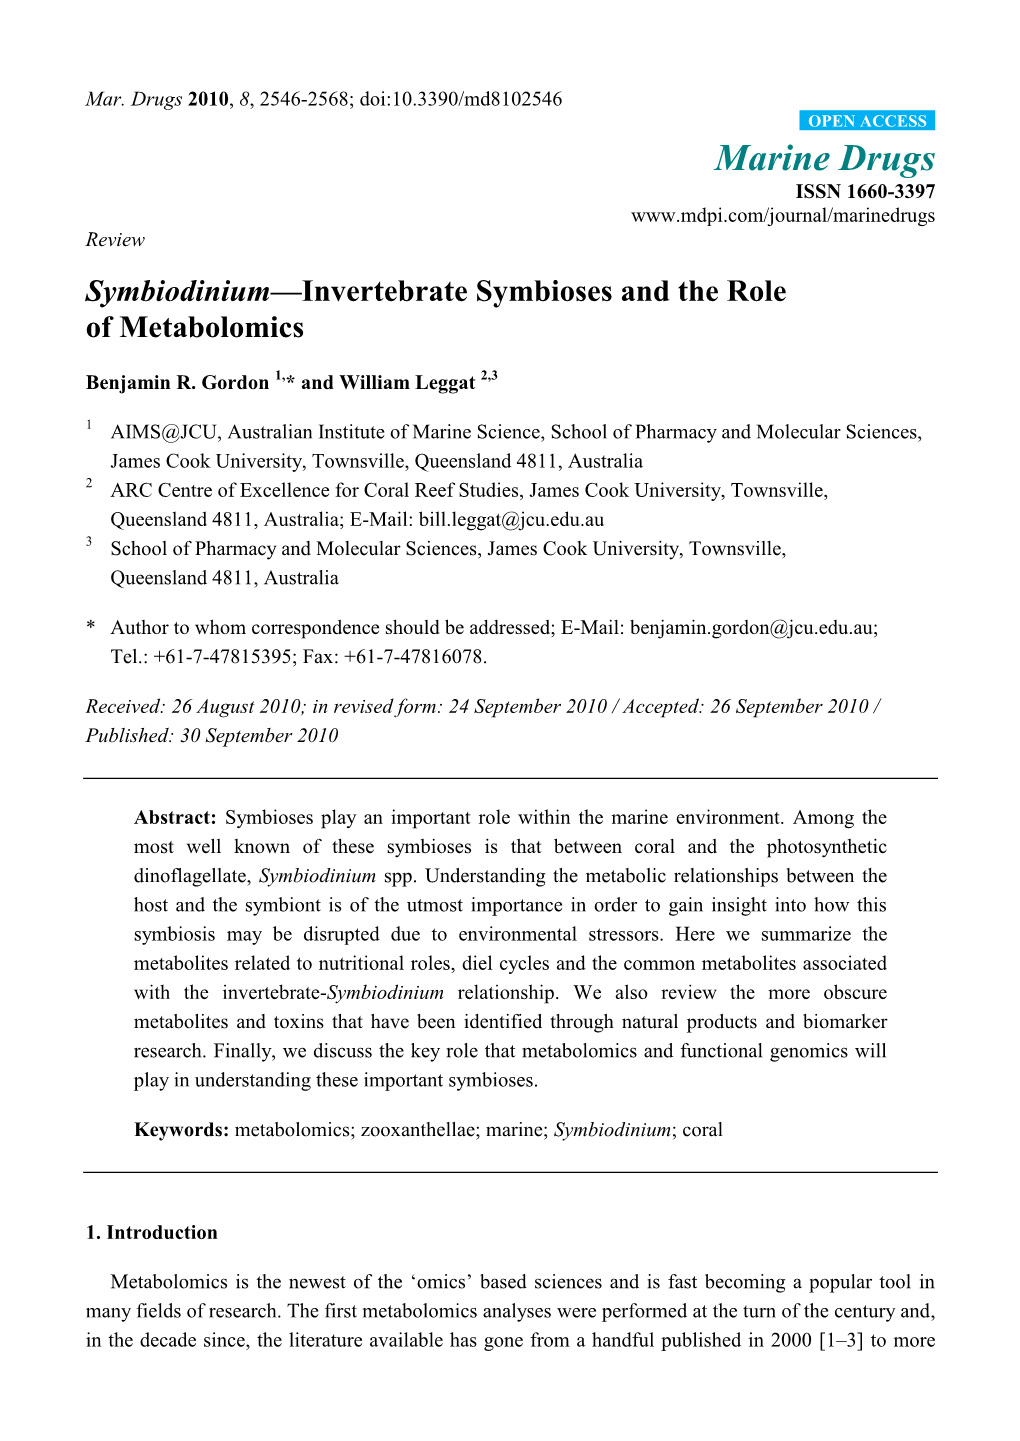 Symbiodinium—Invertebrate Symbioses and the Role of Metabolomics